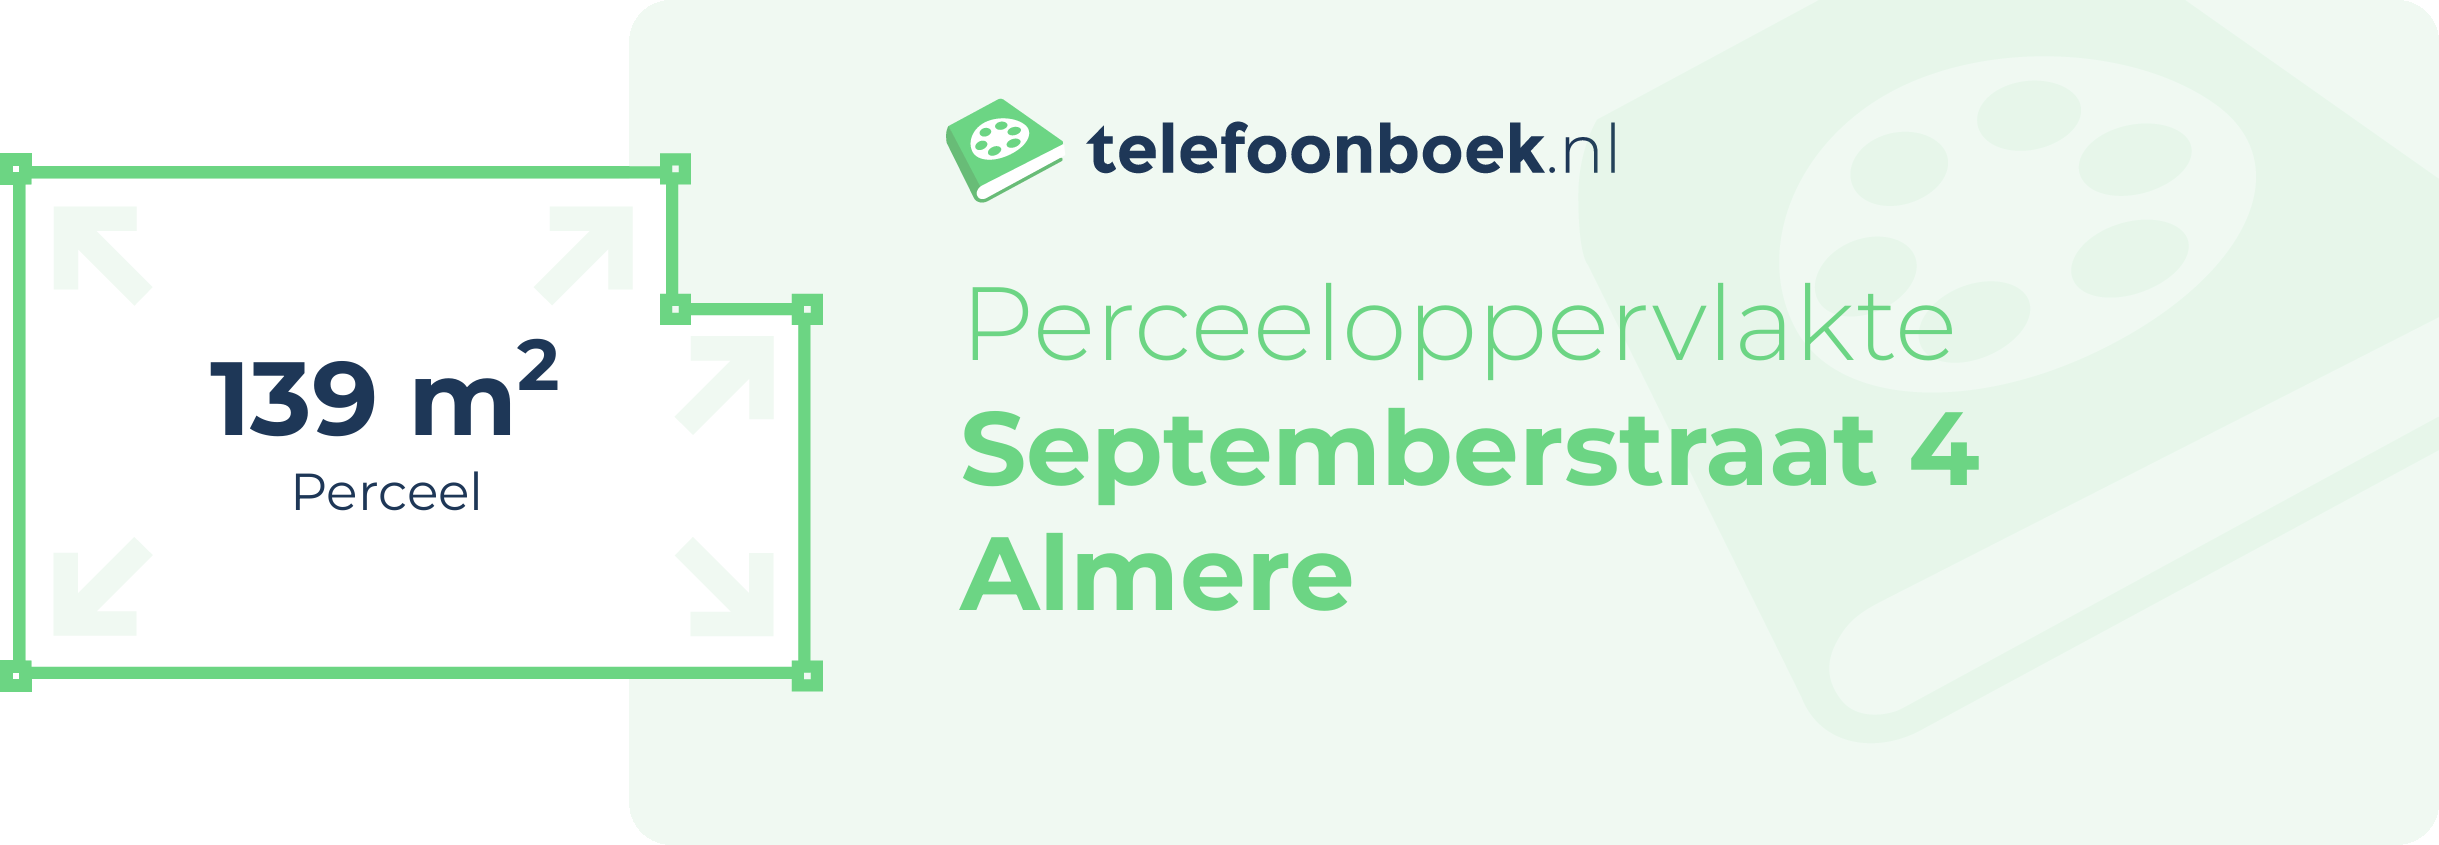 Perceeloppervlakte Septemberstraat 4 Almere